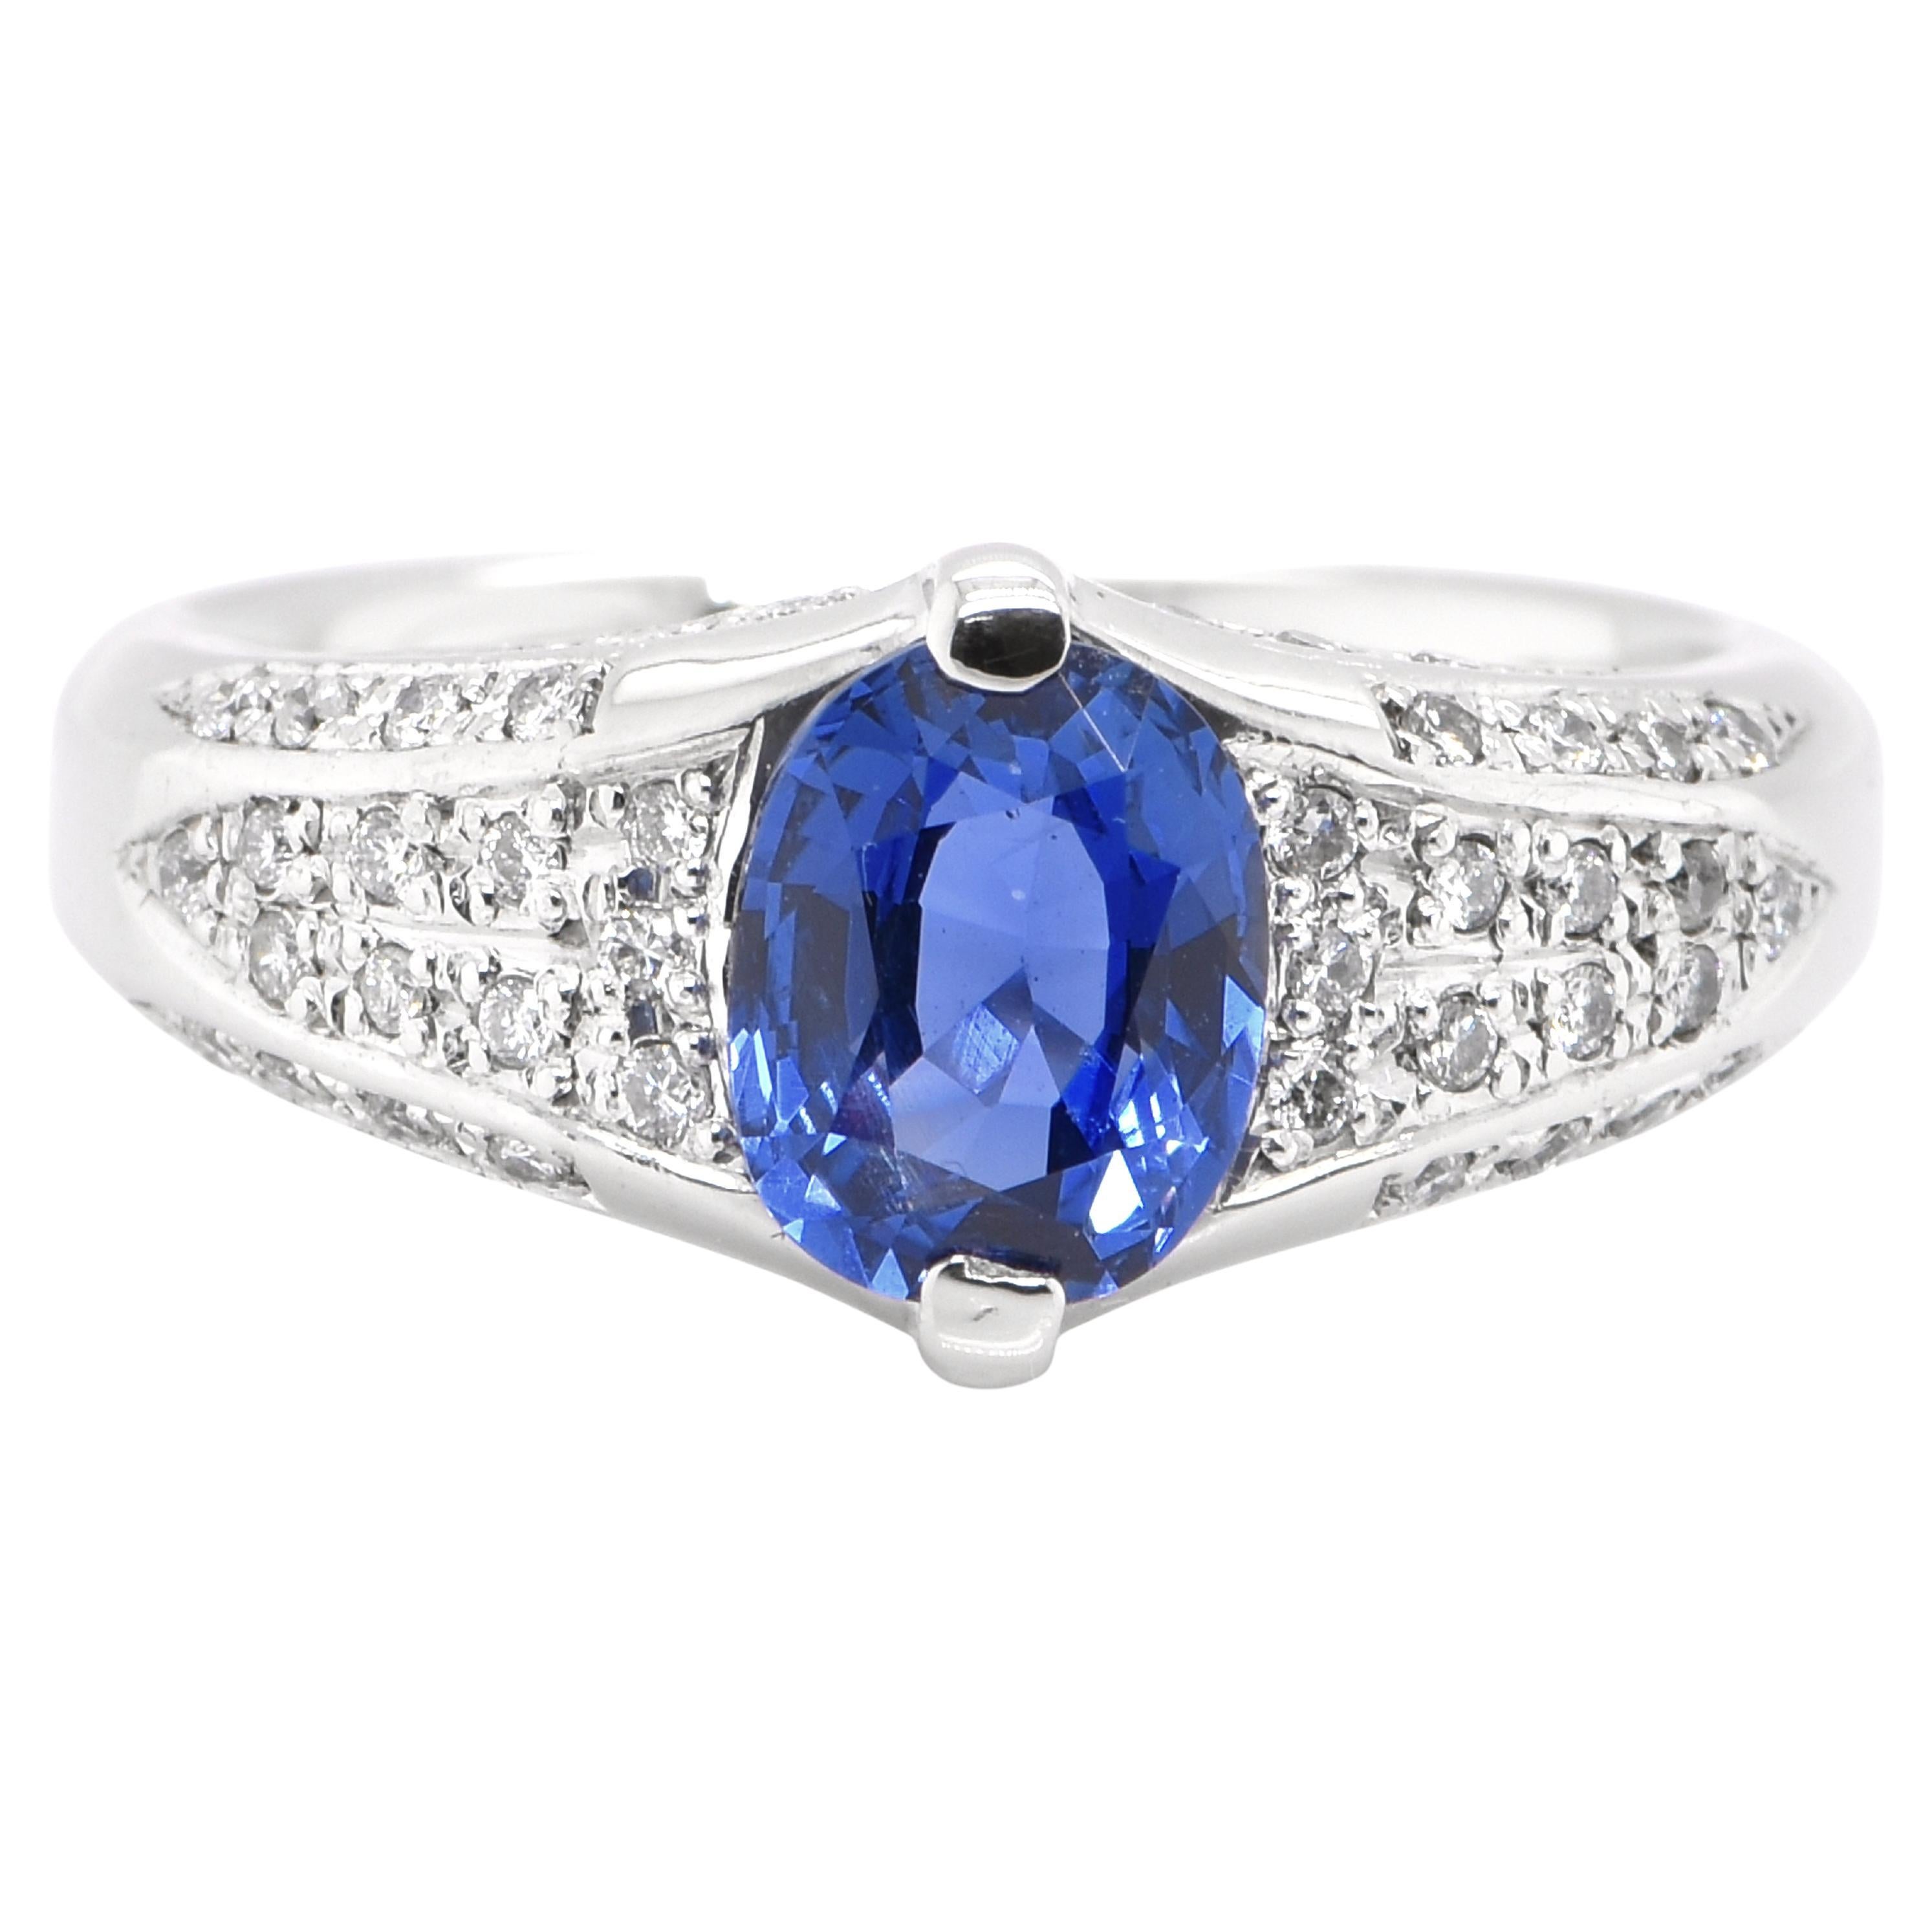 GIA Certified 1.44 Carat, No Heat, Burmese Blue Sapphire Ring set in Platinum